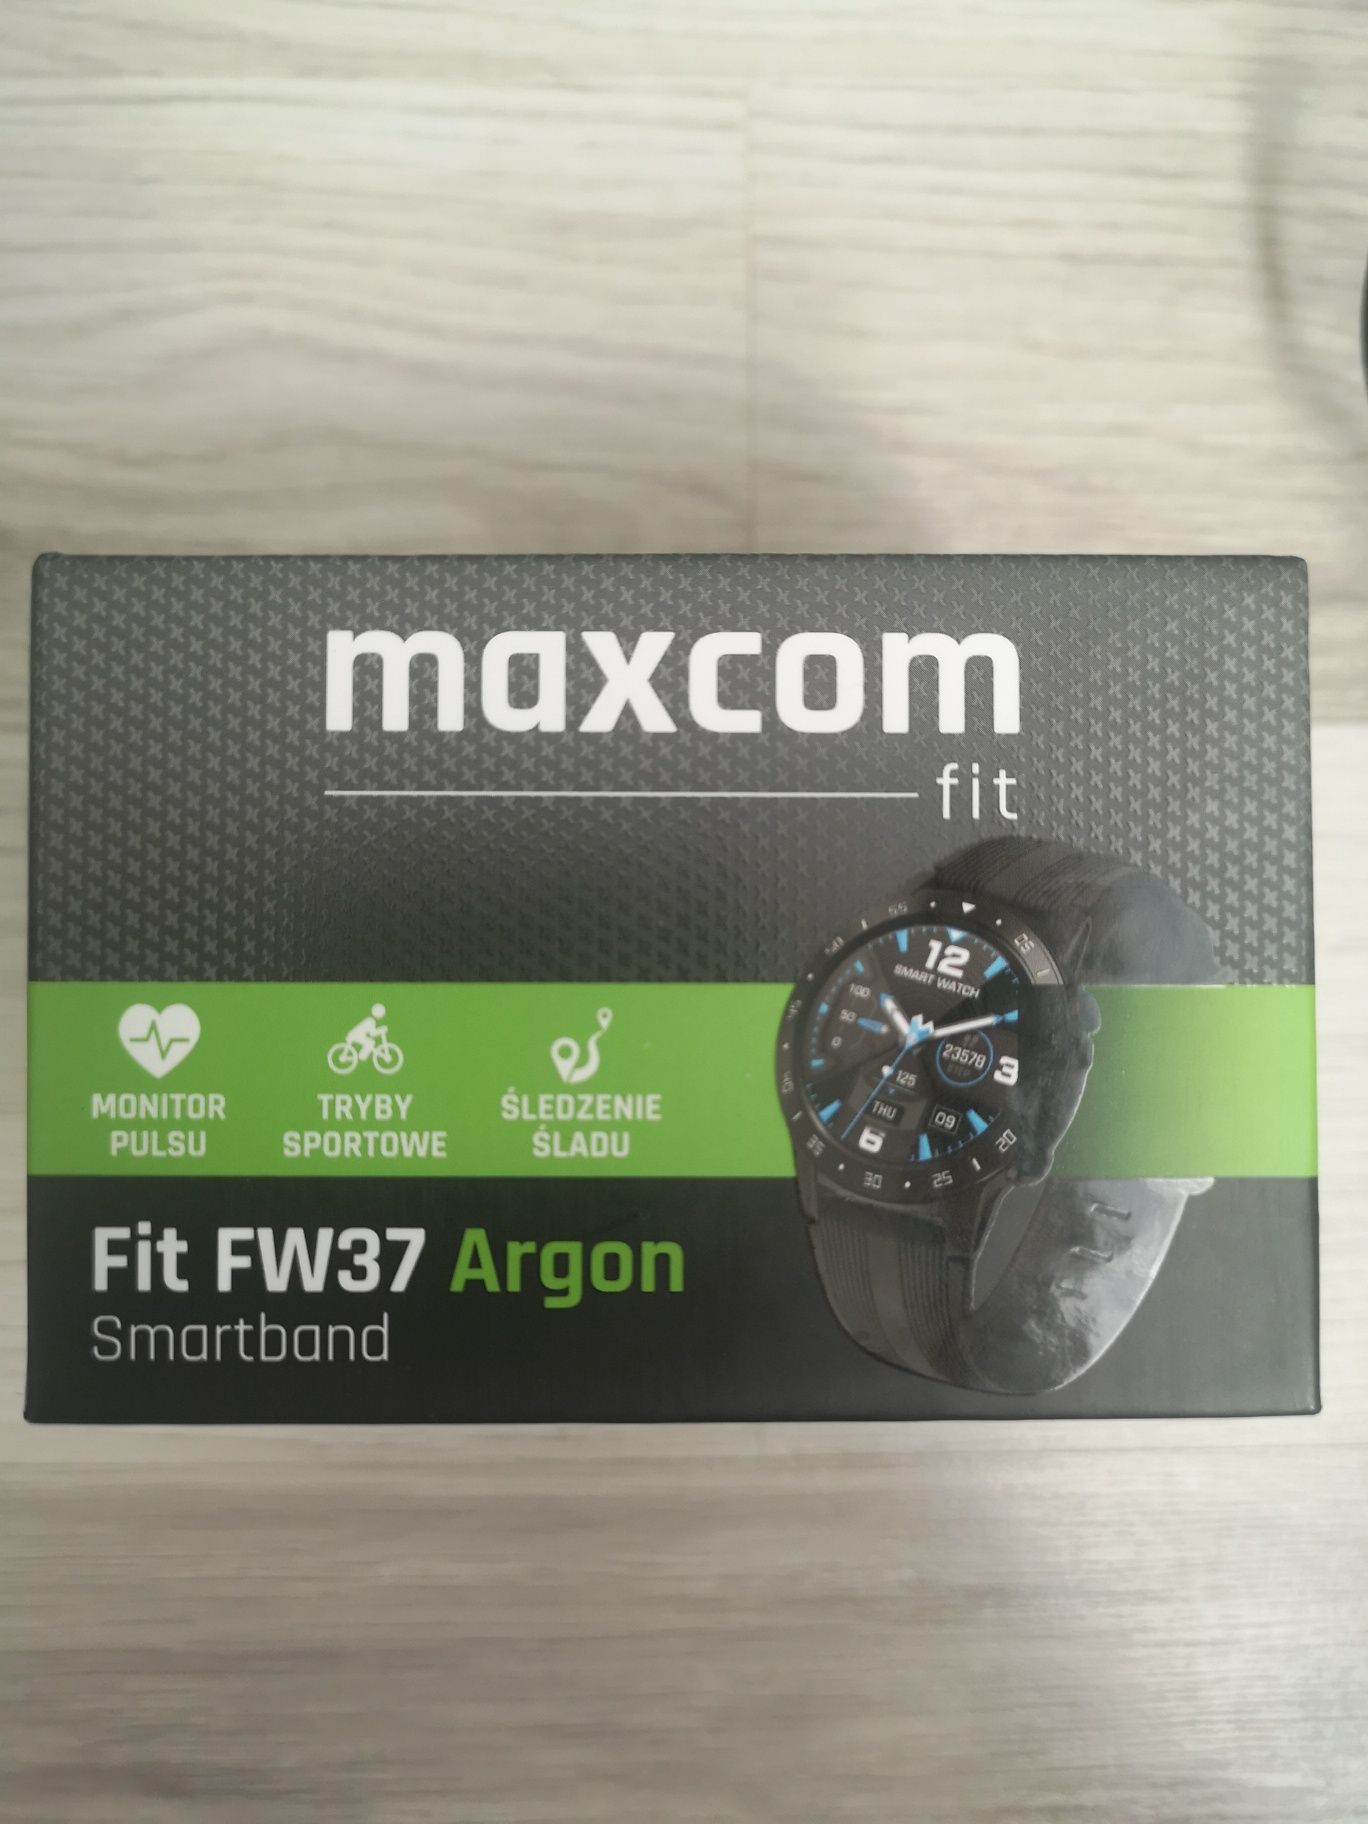 Vând ceas Maxcom Fit FW37 Argon, NOU, FULL BOX